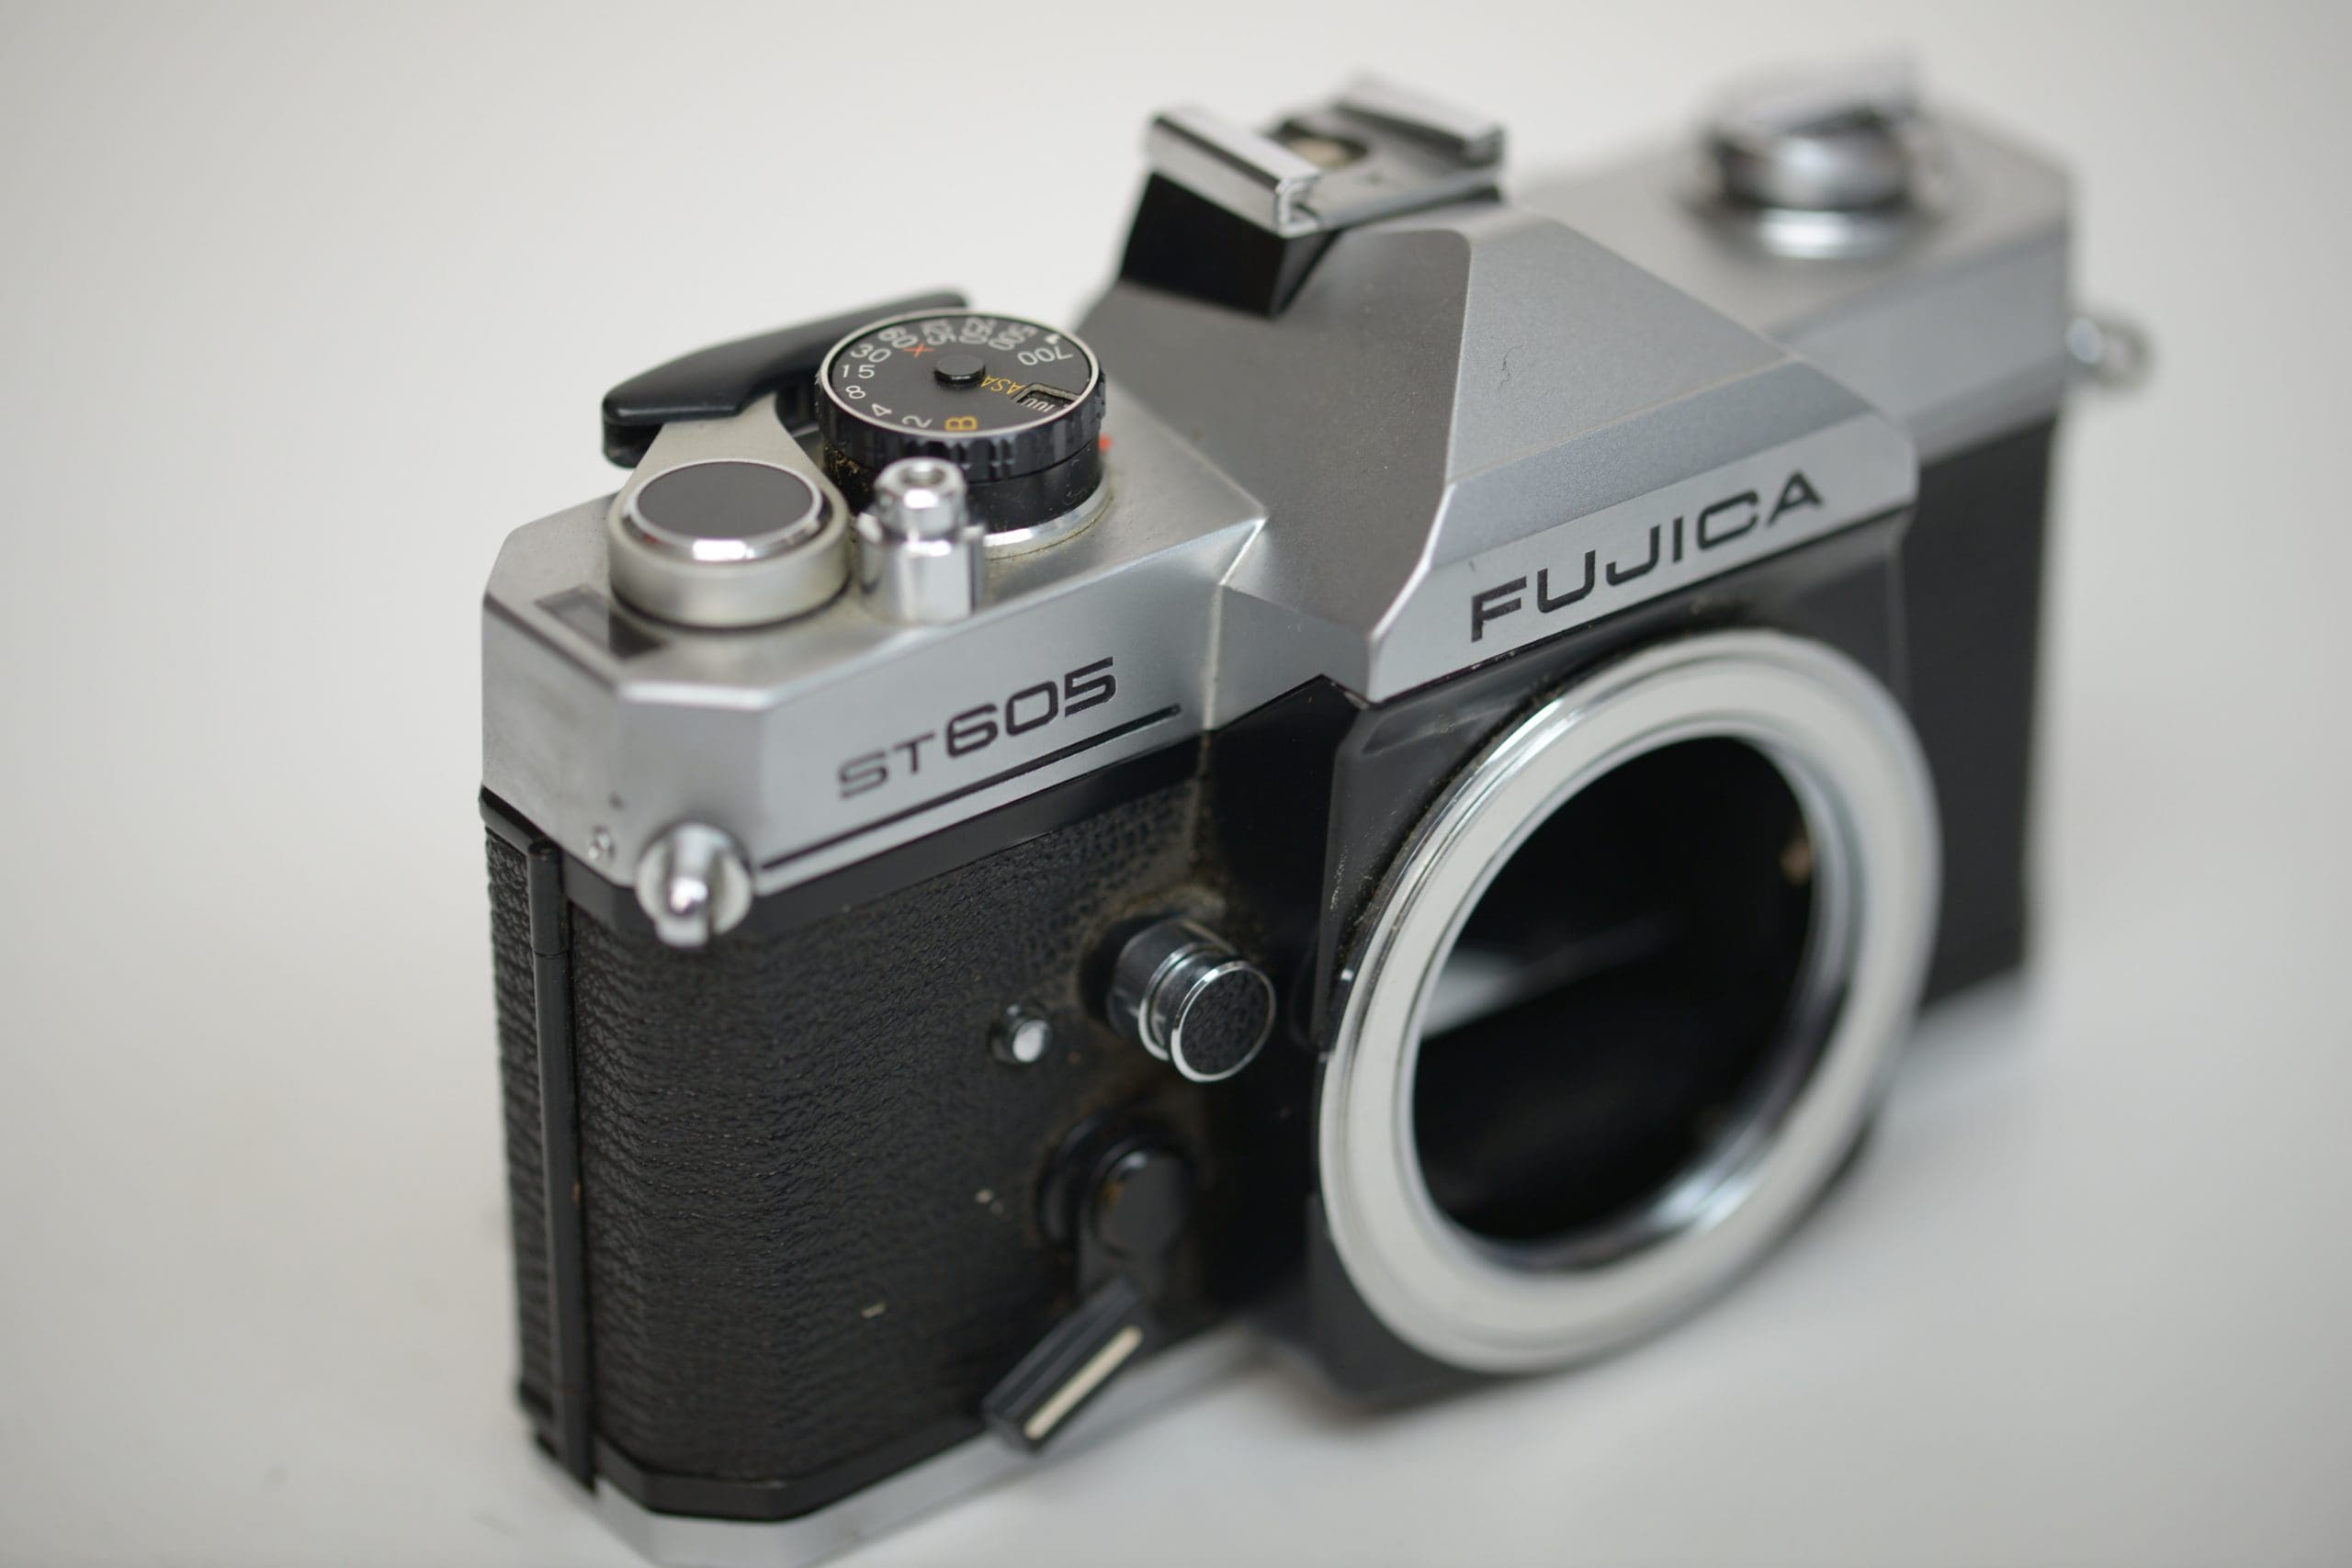 Fujica ST605 35mm SLR (Camera Body) - Black Lab Imaging